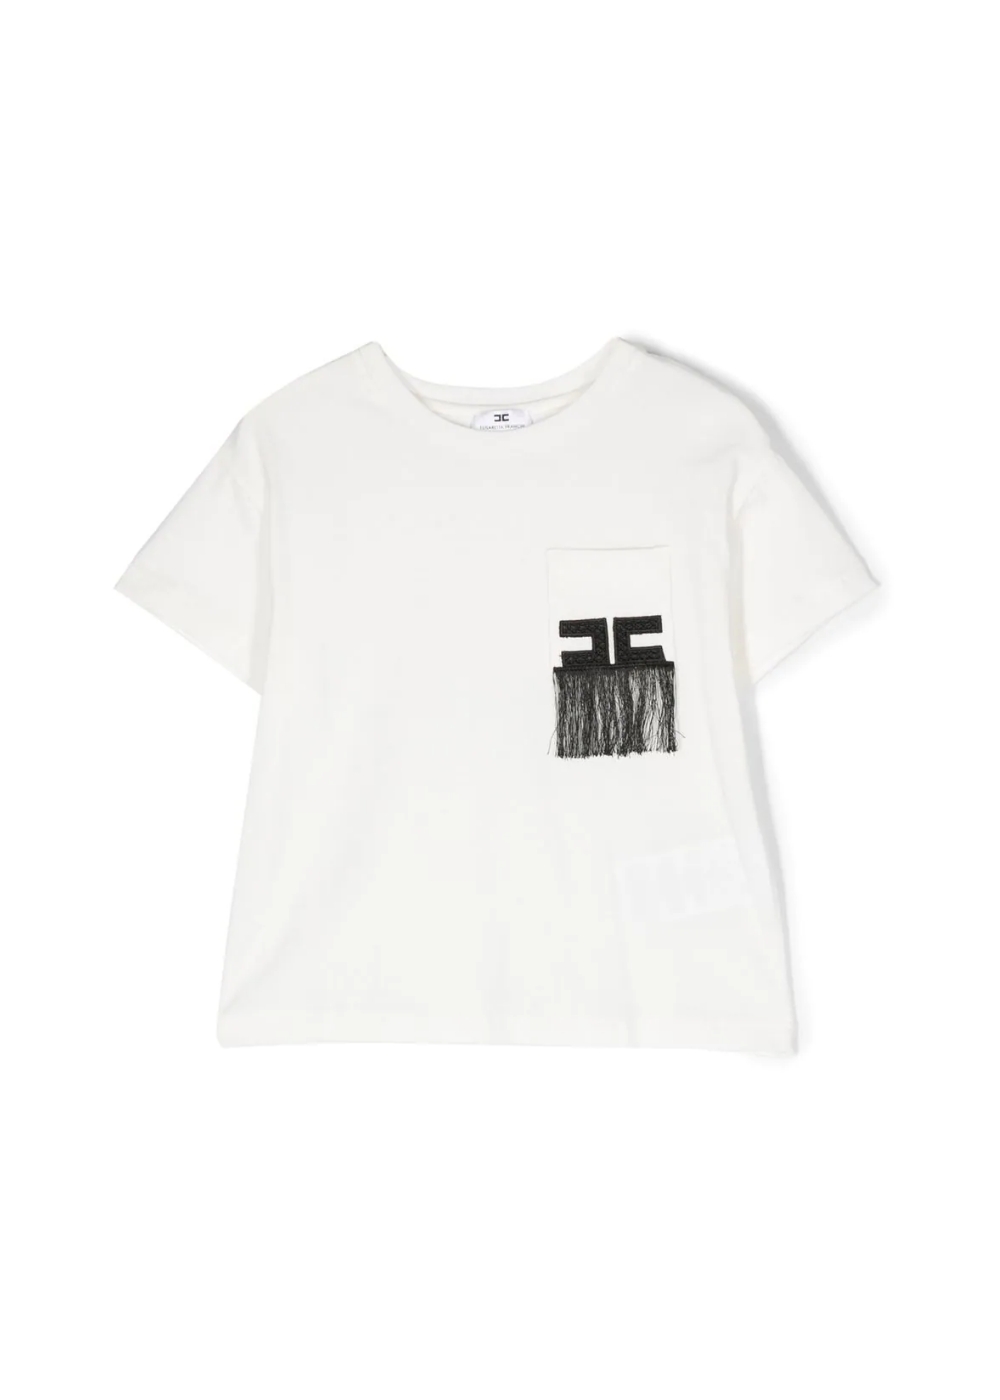 Featured image for “Elisabetta Franchi T-Shirt con Ricamo”